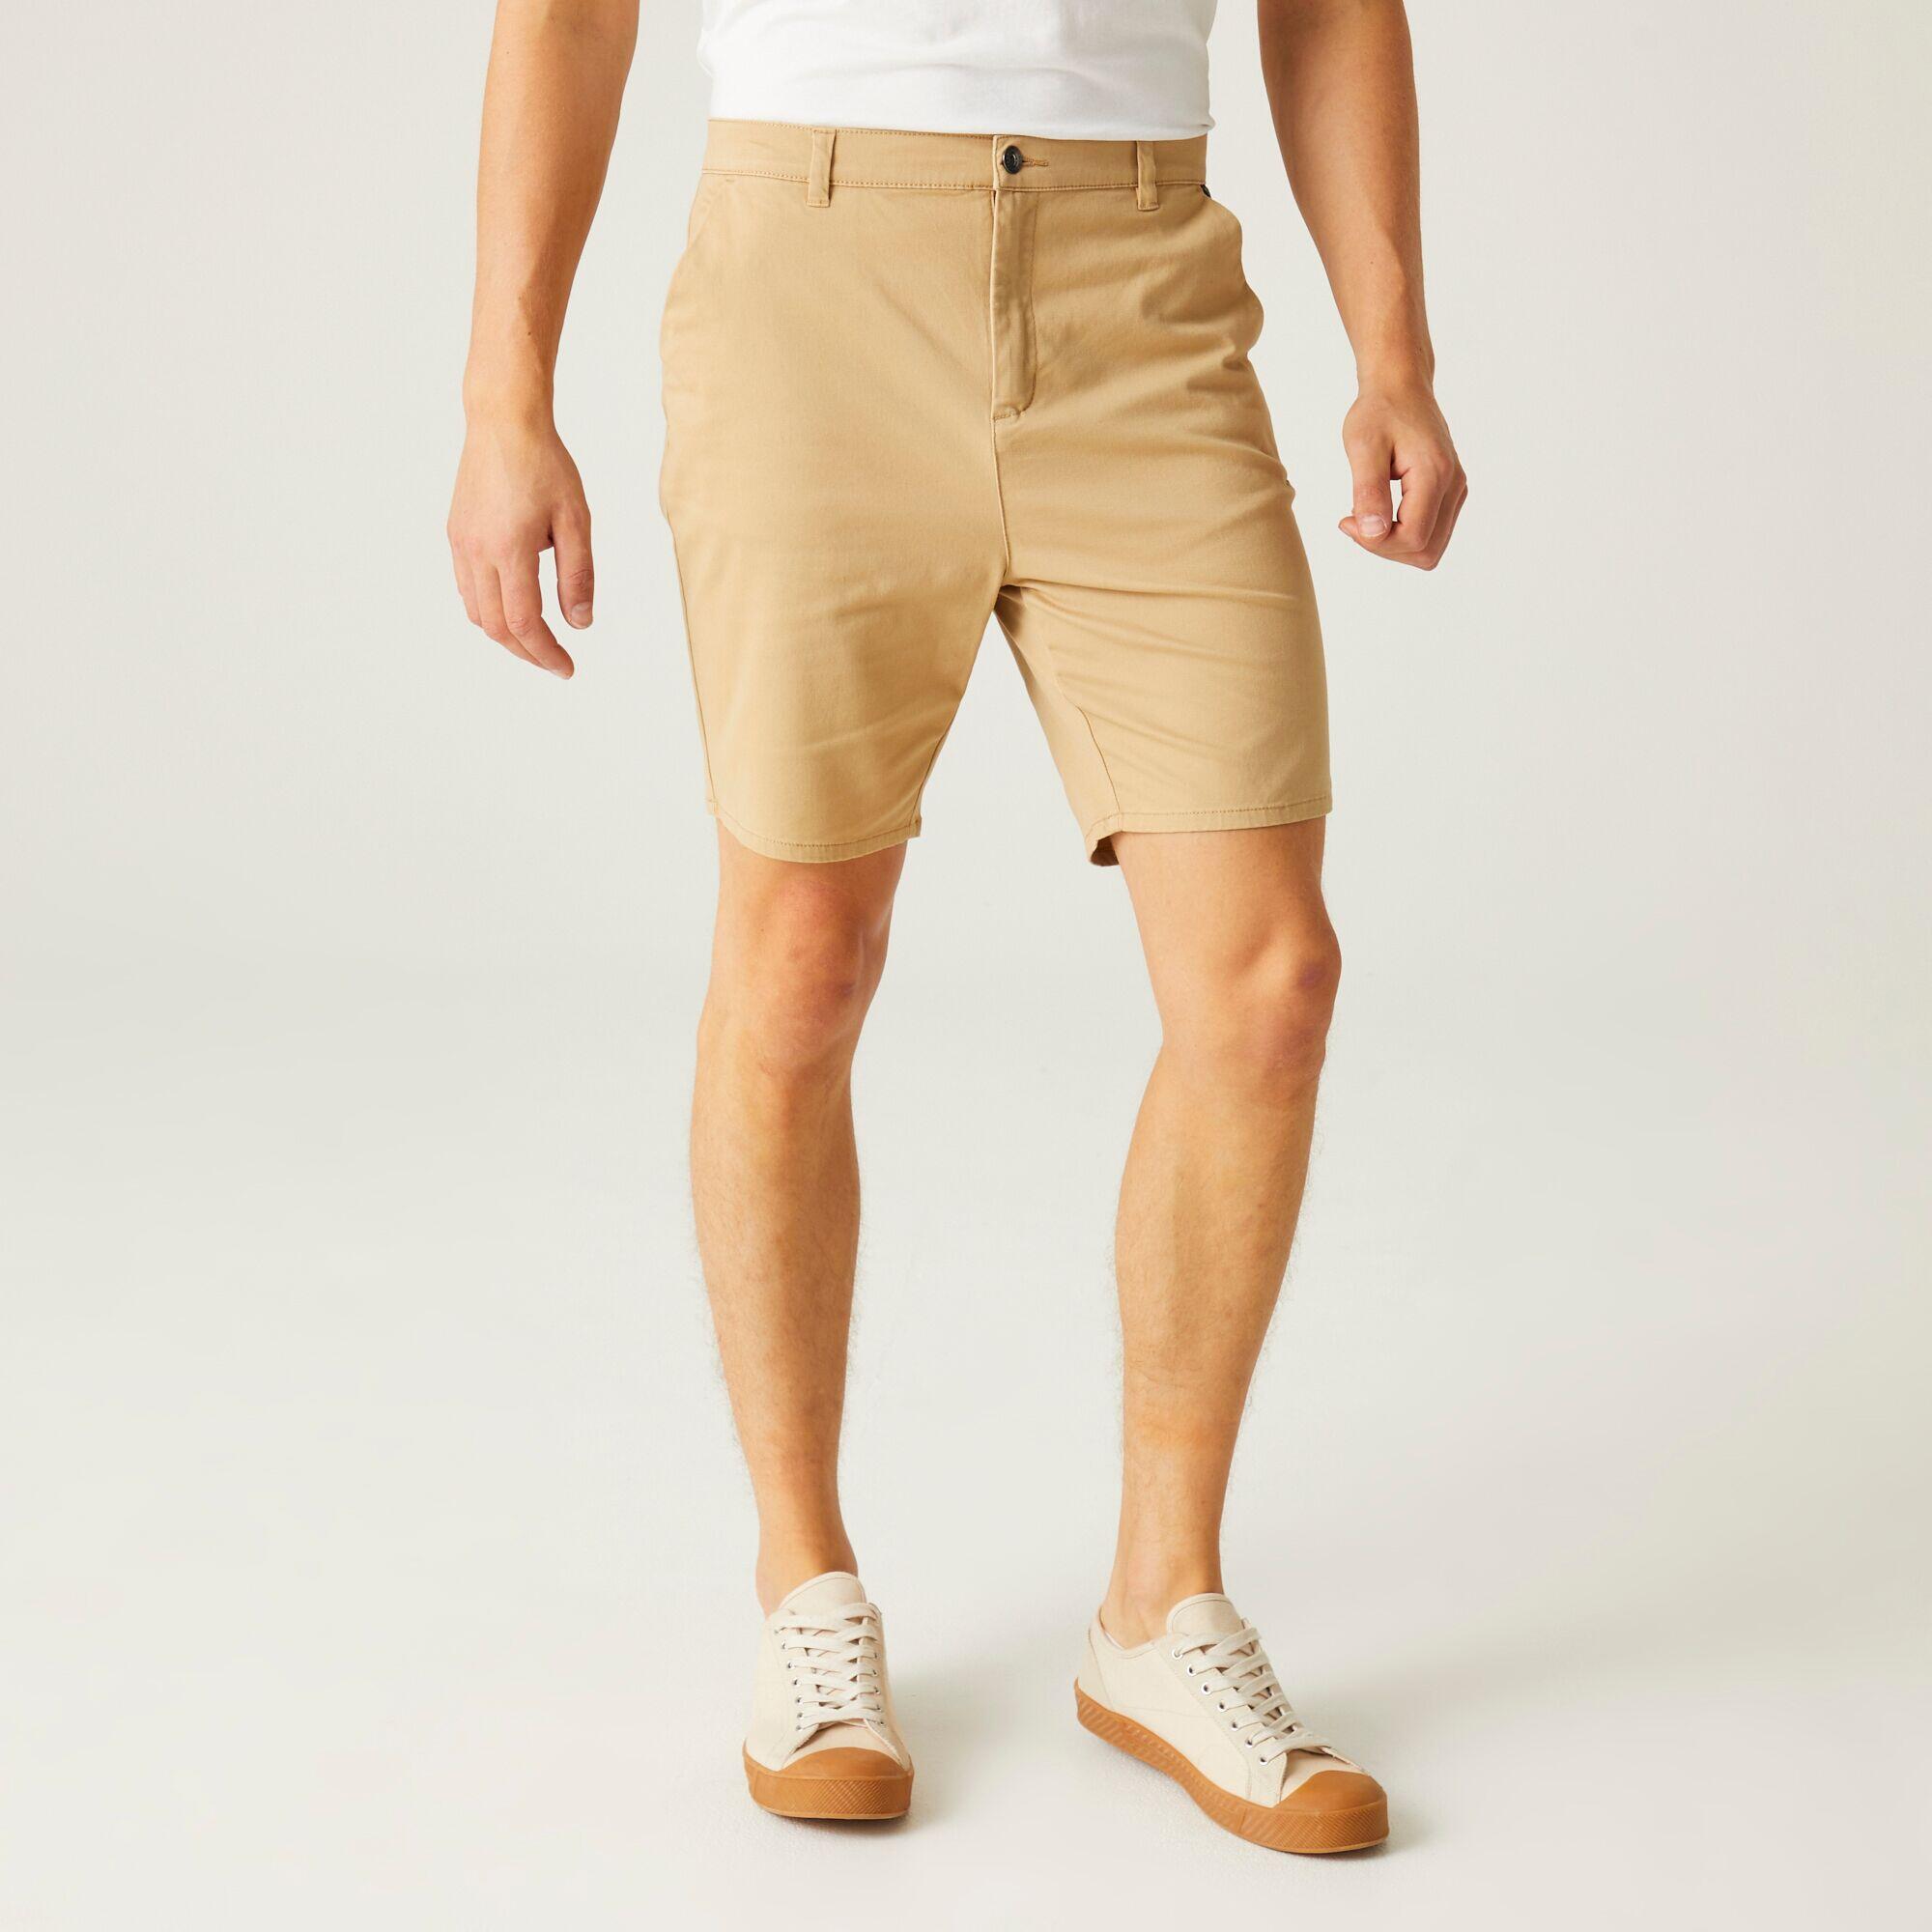 REGATTA Men's Sabden Chino Shorts